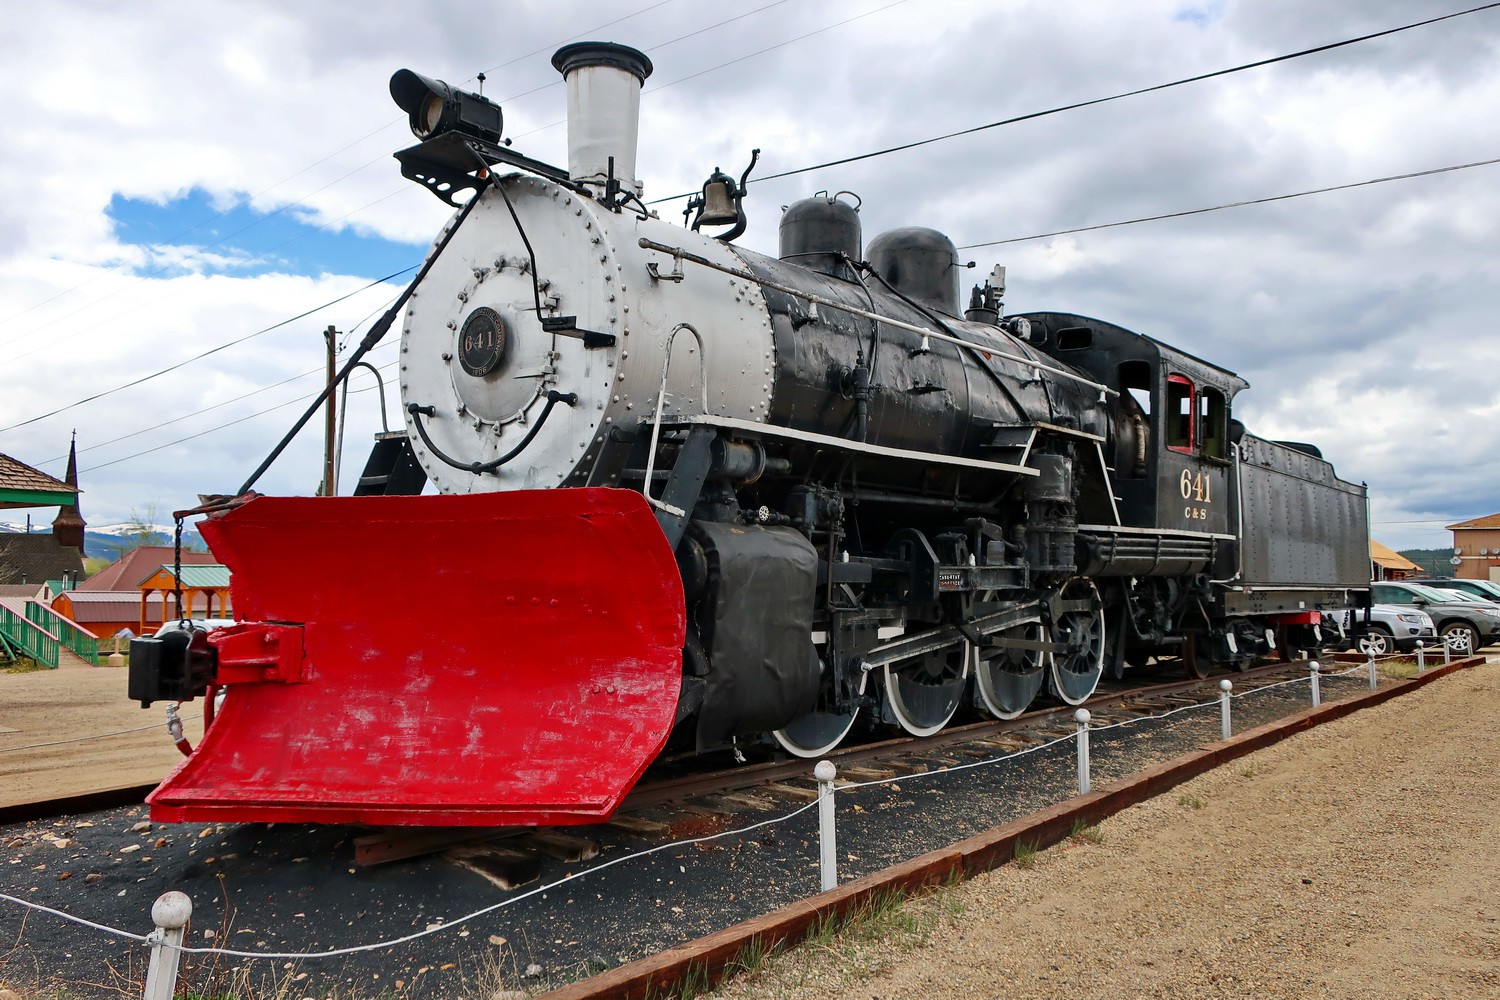 Old locomotive in Leadville, built 1906